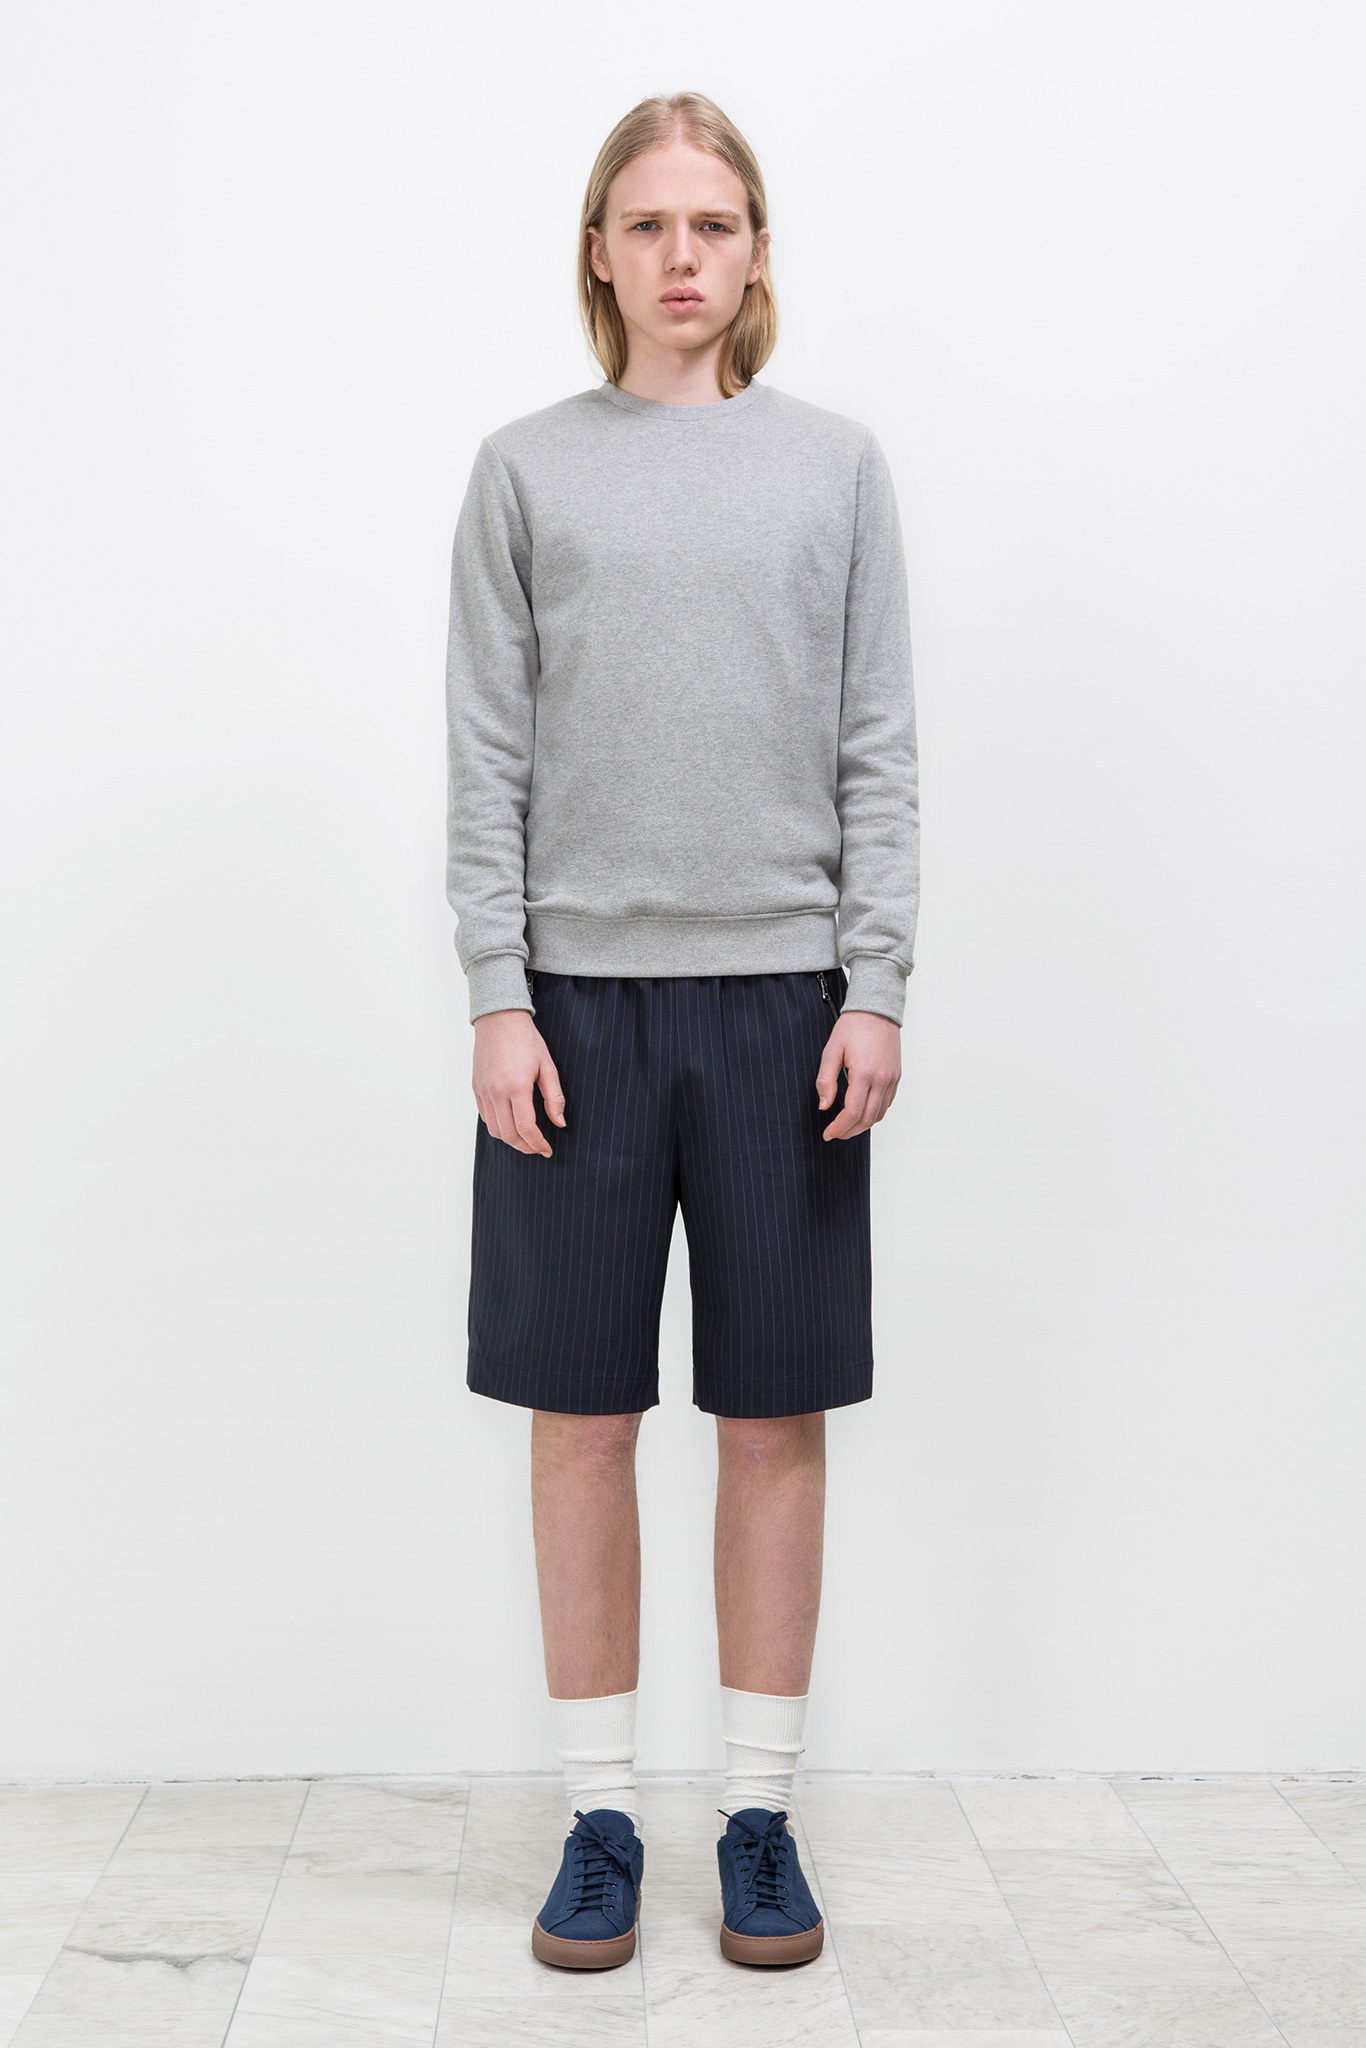 tres-bien-menswear-collection-spring-summer-2015-09